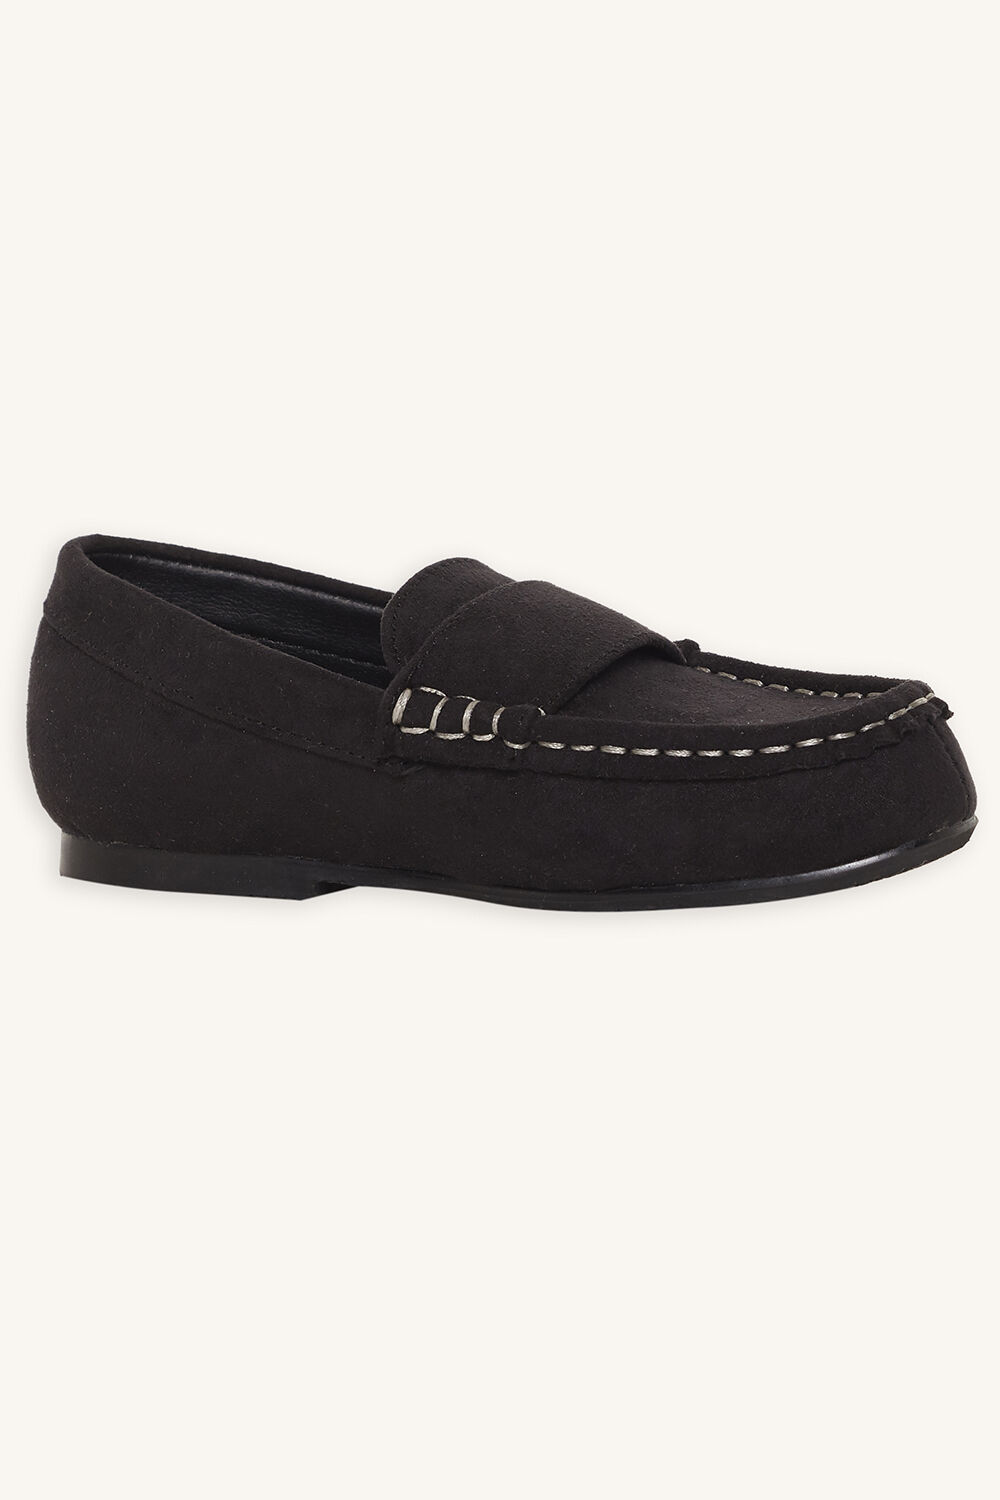 Franky Loafer Shoe in Black | Bardot Junior